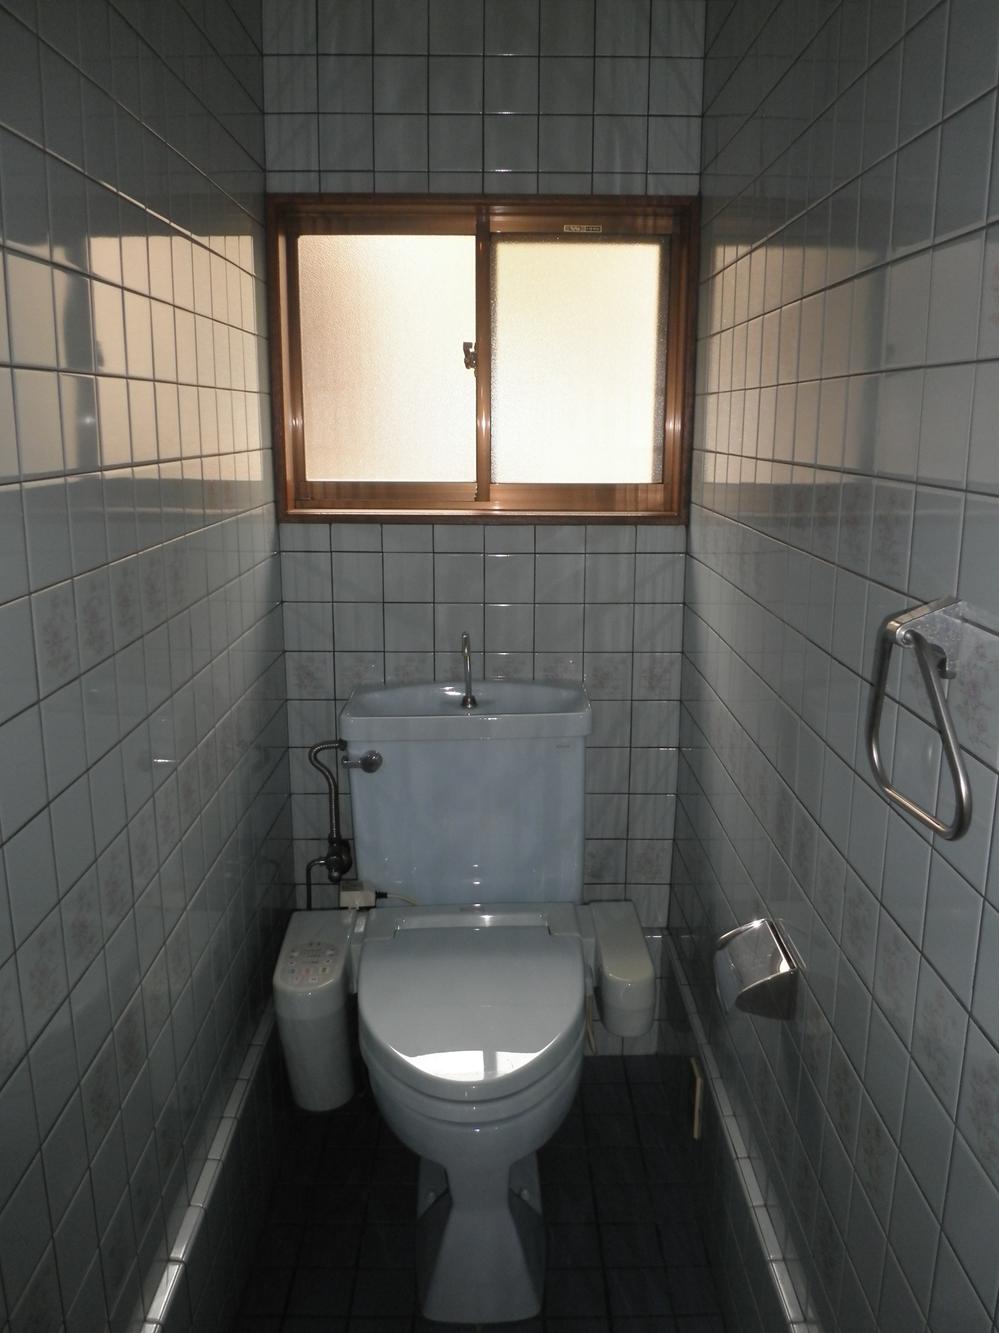 Toilet. The first floor toilet